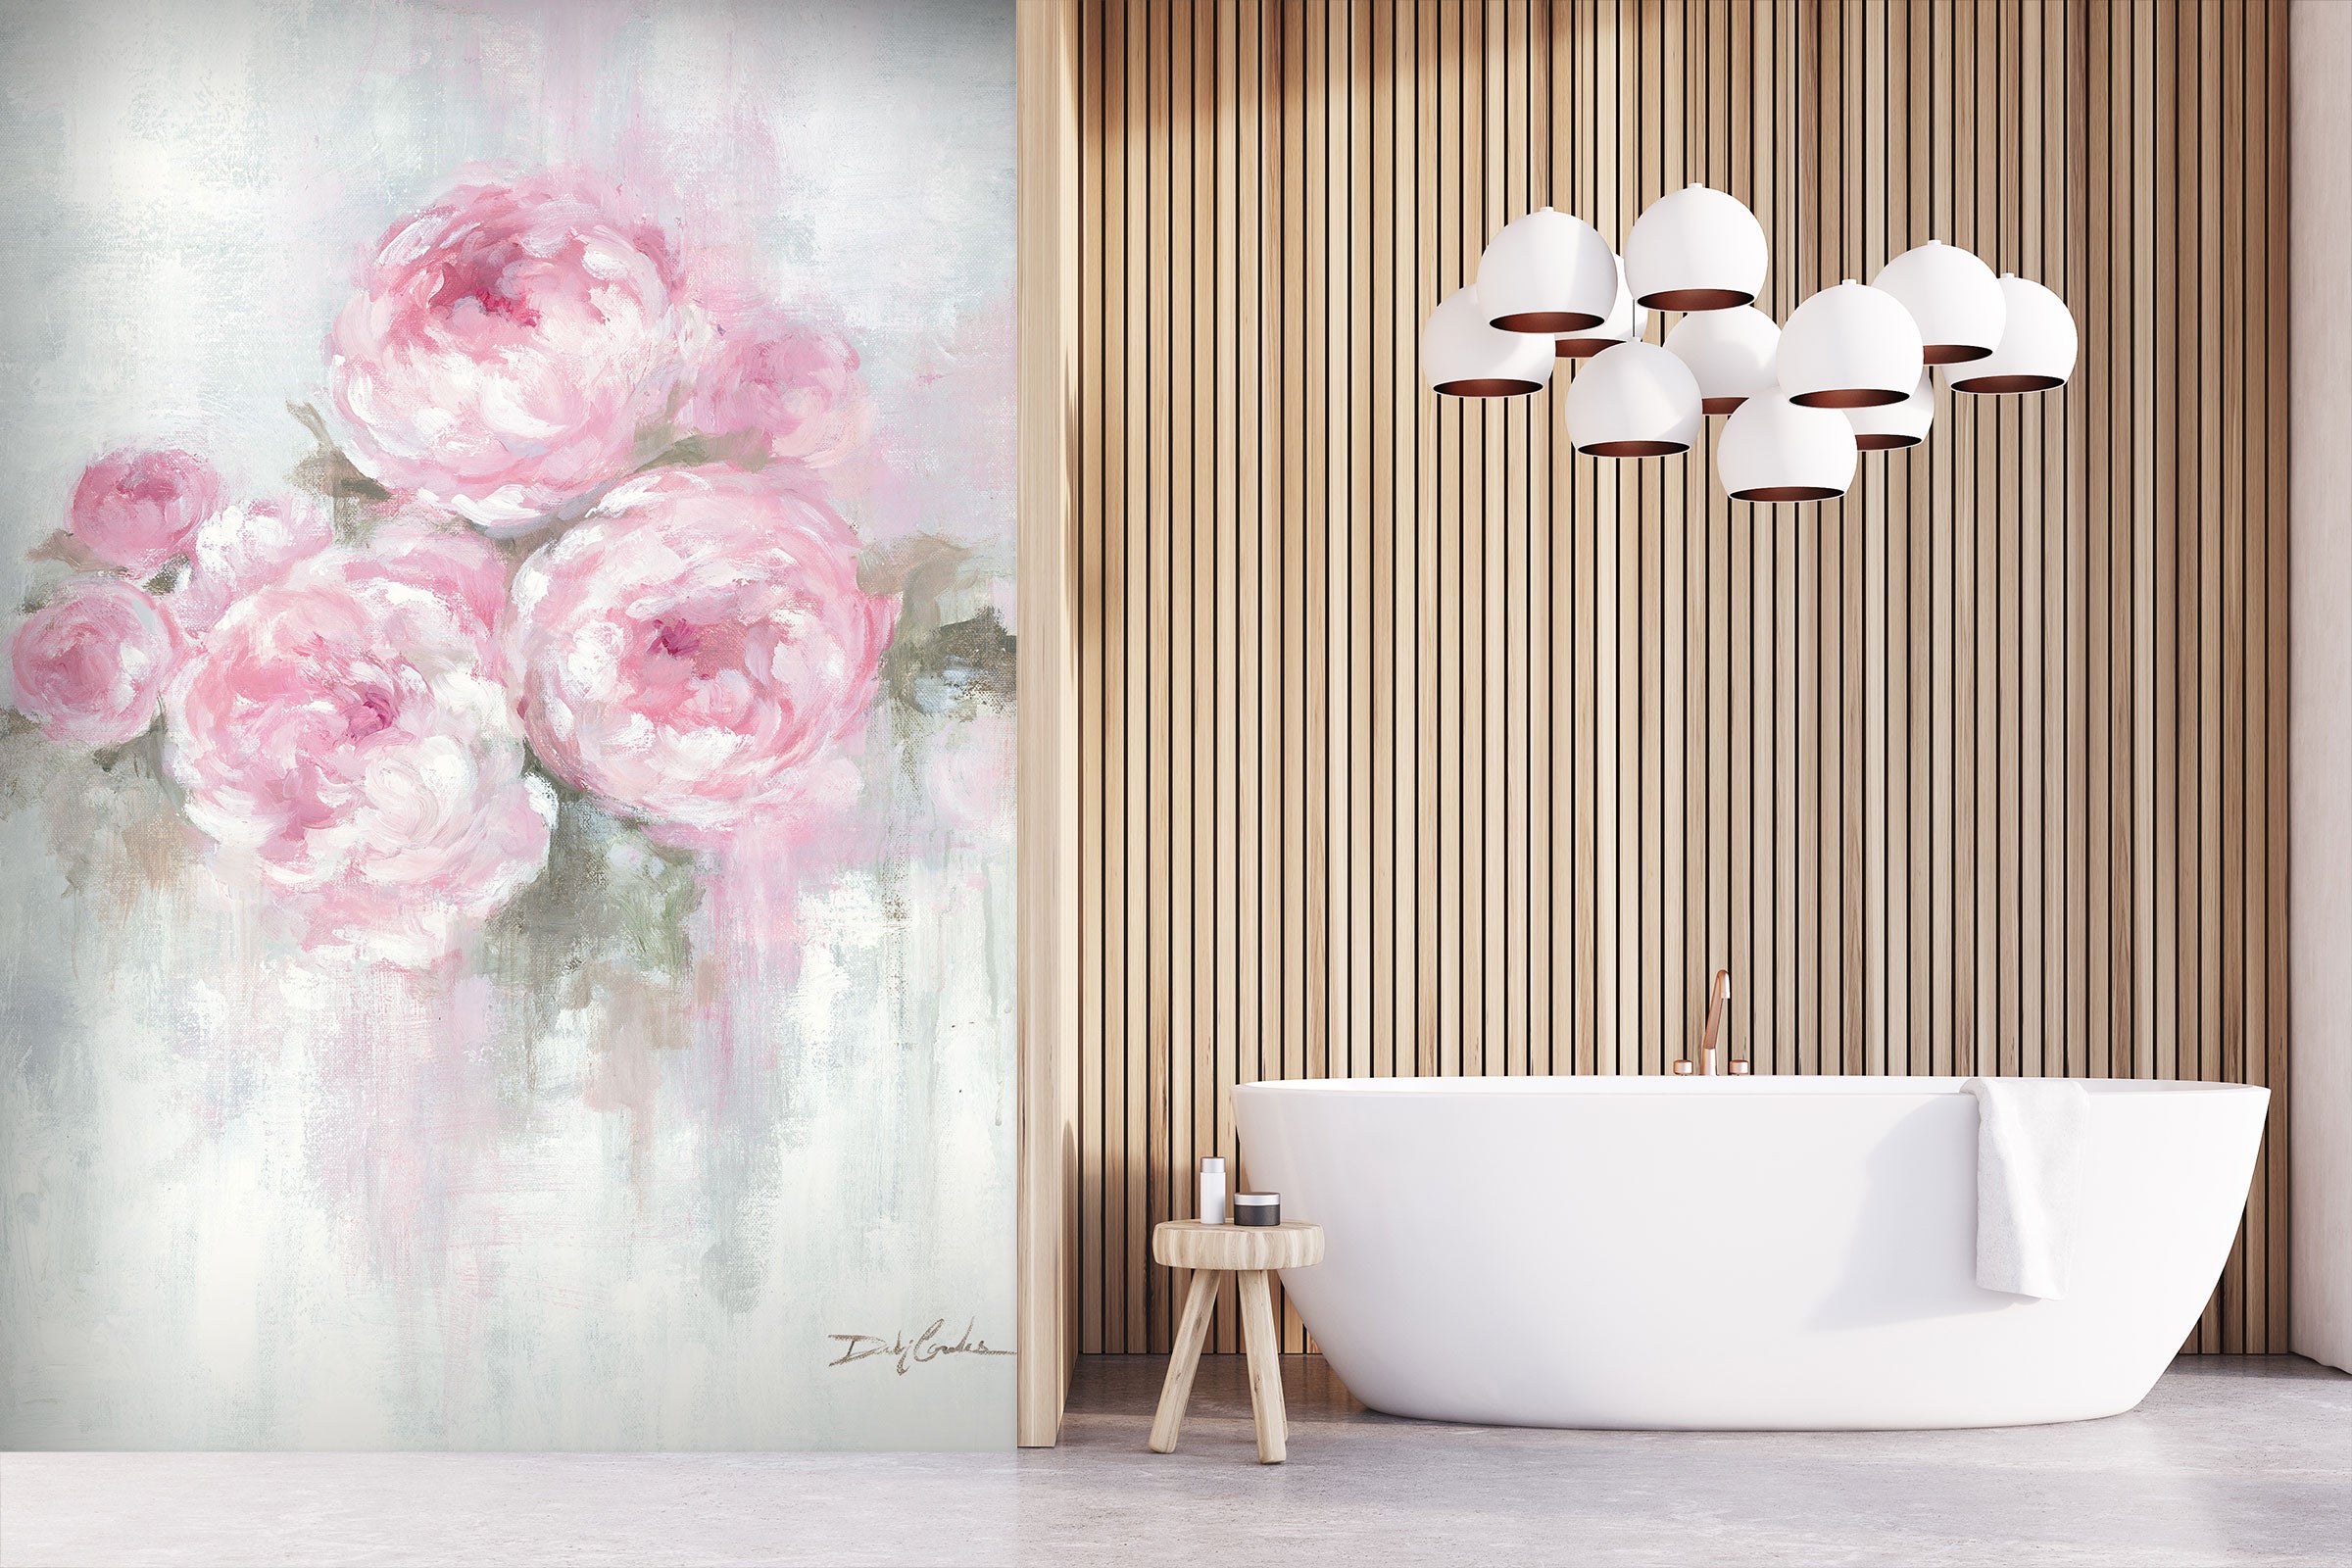 3D Pink Flowers 4031 Debi Coules Wall Mural Wall Murals